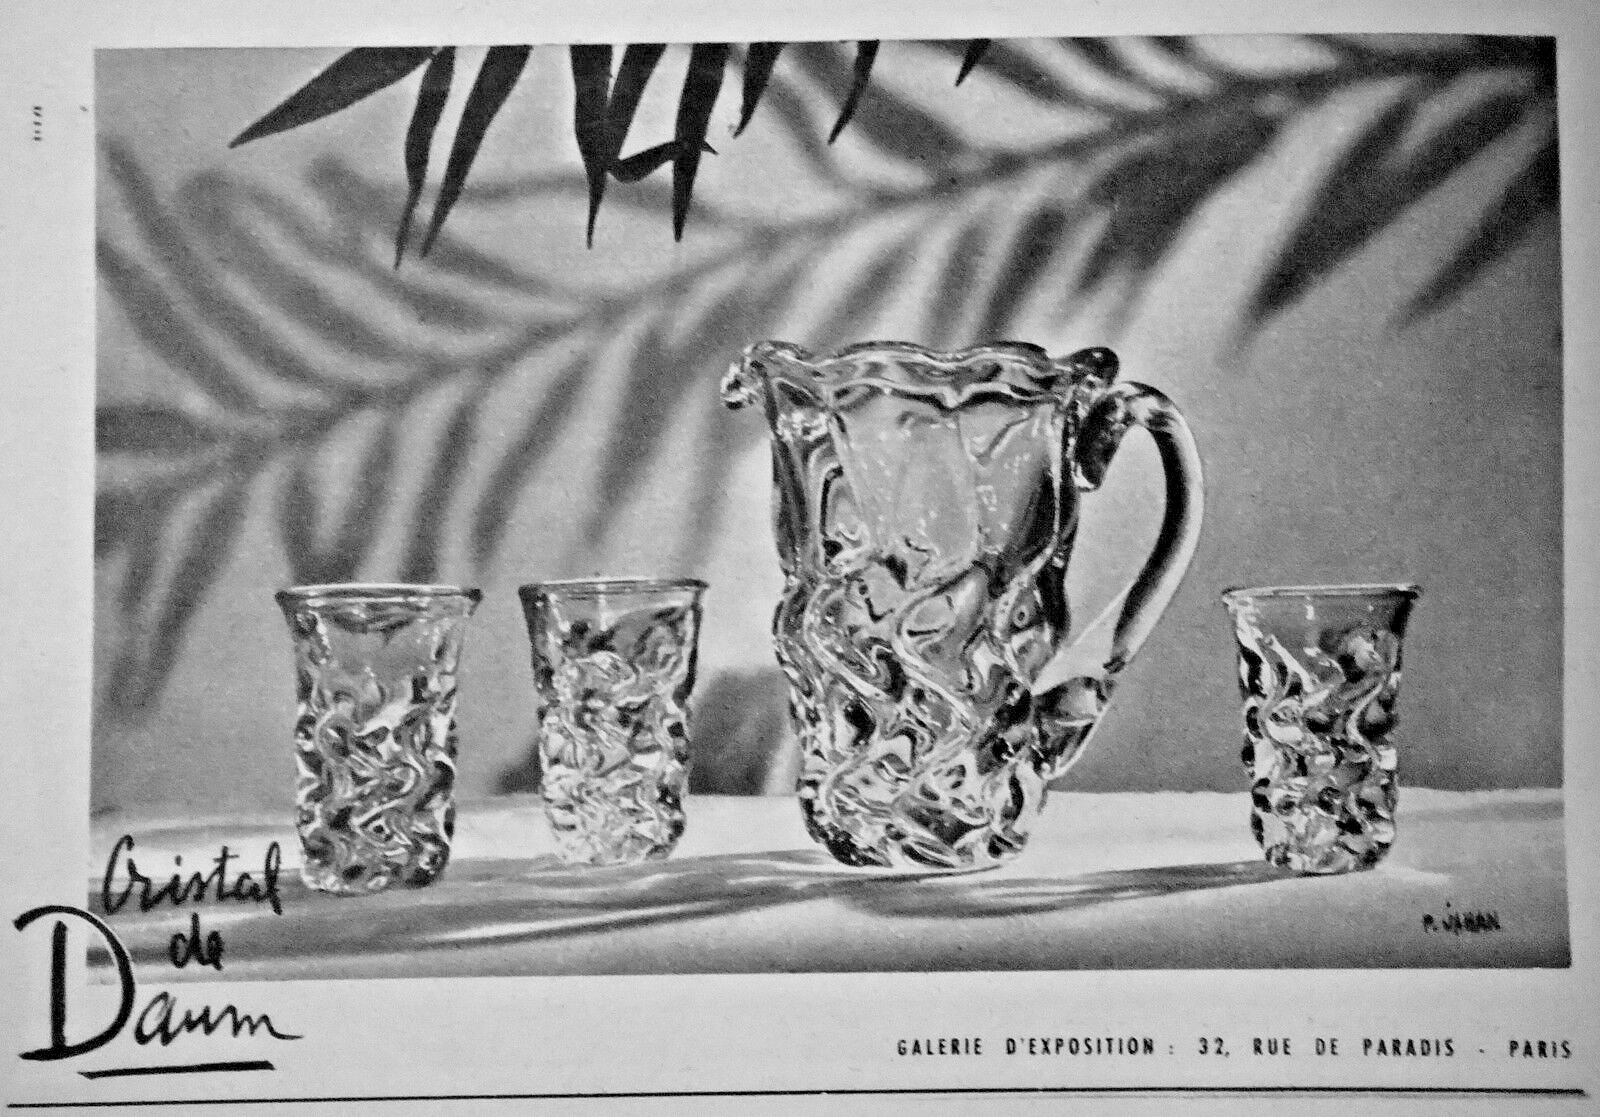 1951 DAUM CRYSTAL GLASS & PITCHER PRESS ADVERTISEMENT - P.JAHAN